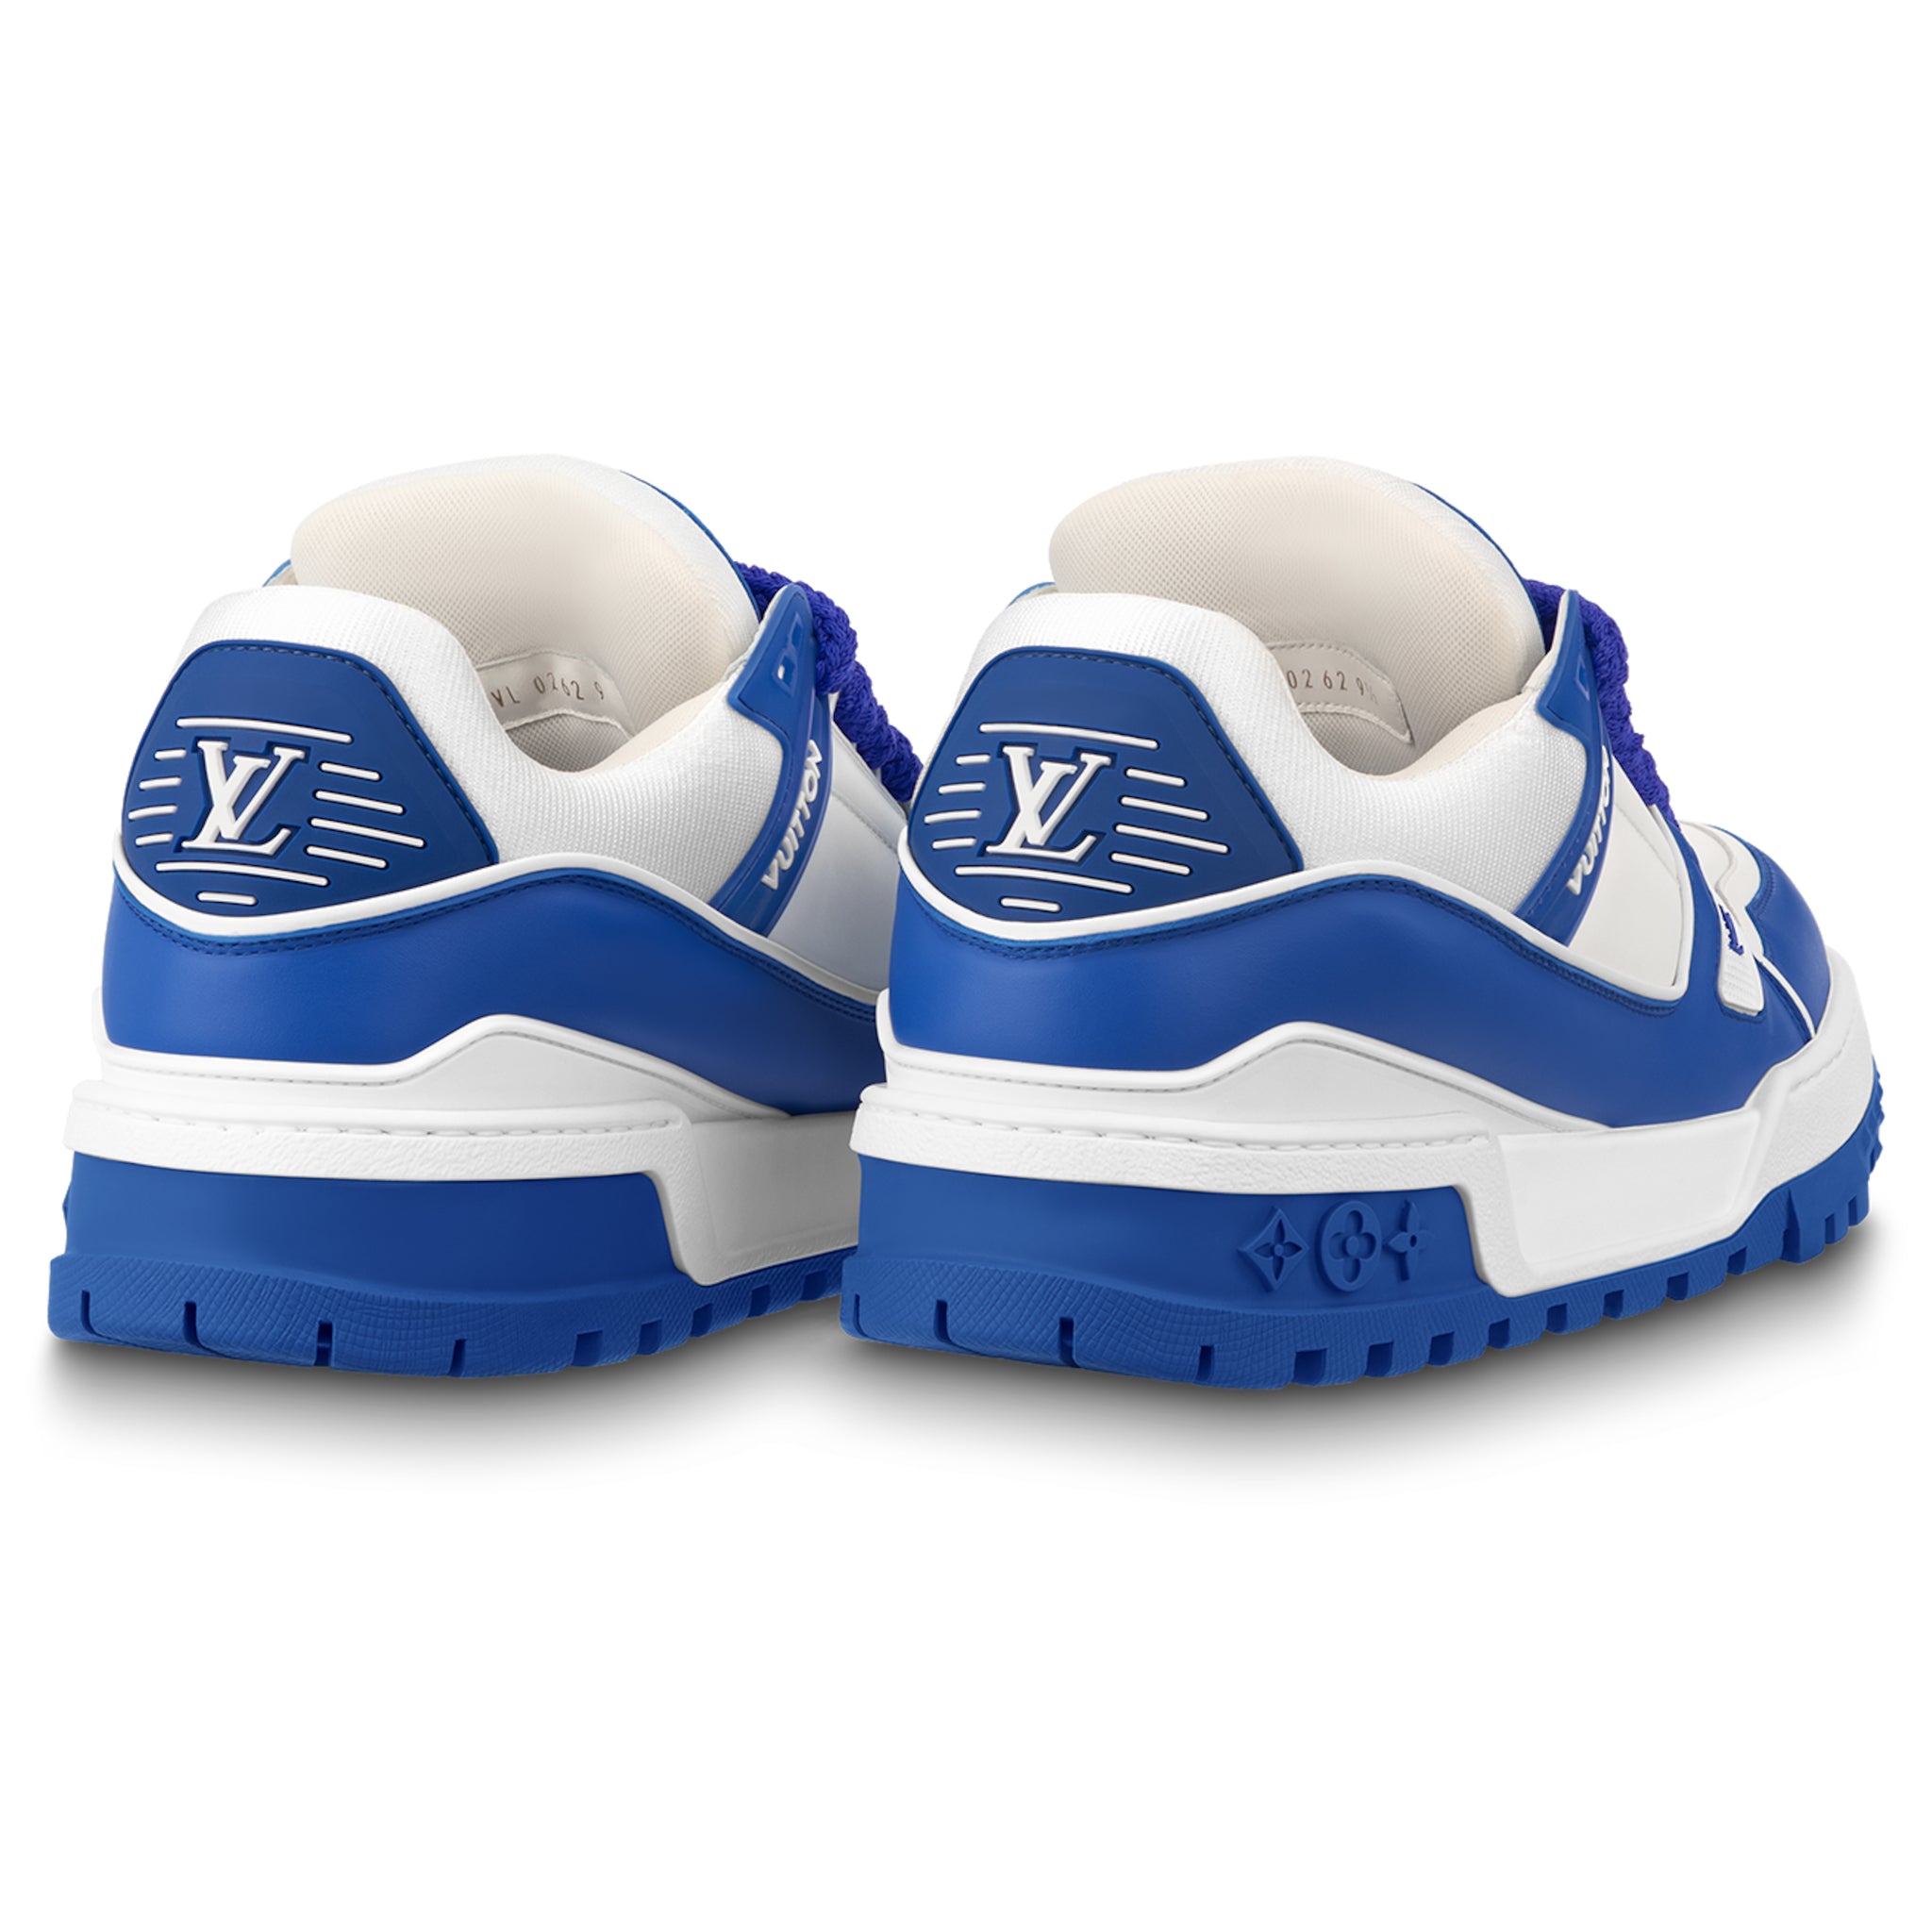 Back view of Louis Vuitton LV Maxi Trainer 1ABZPU Blue Sneaker